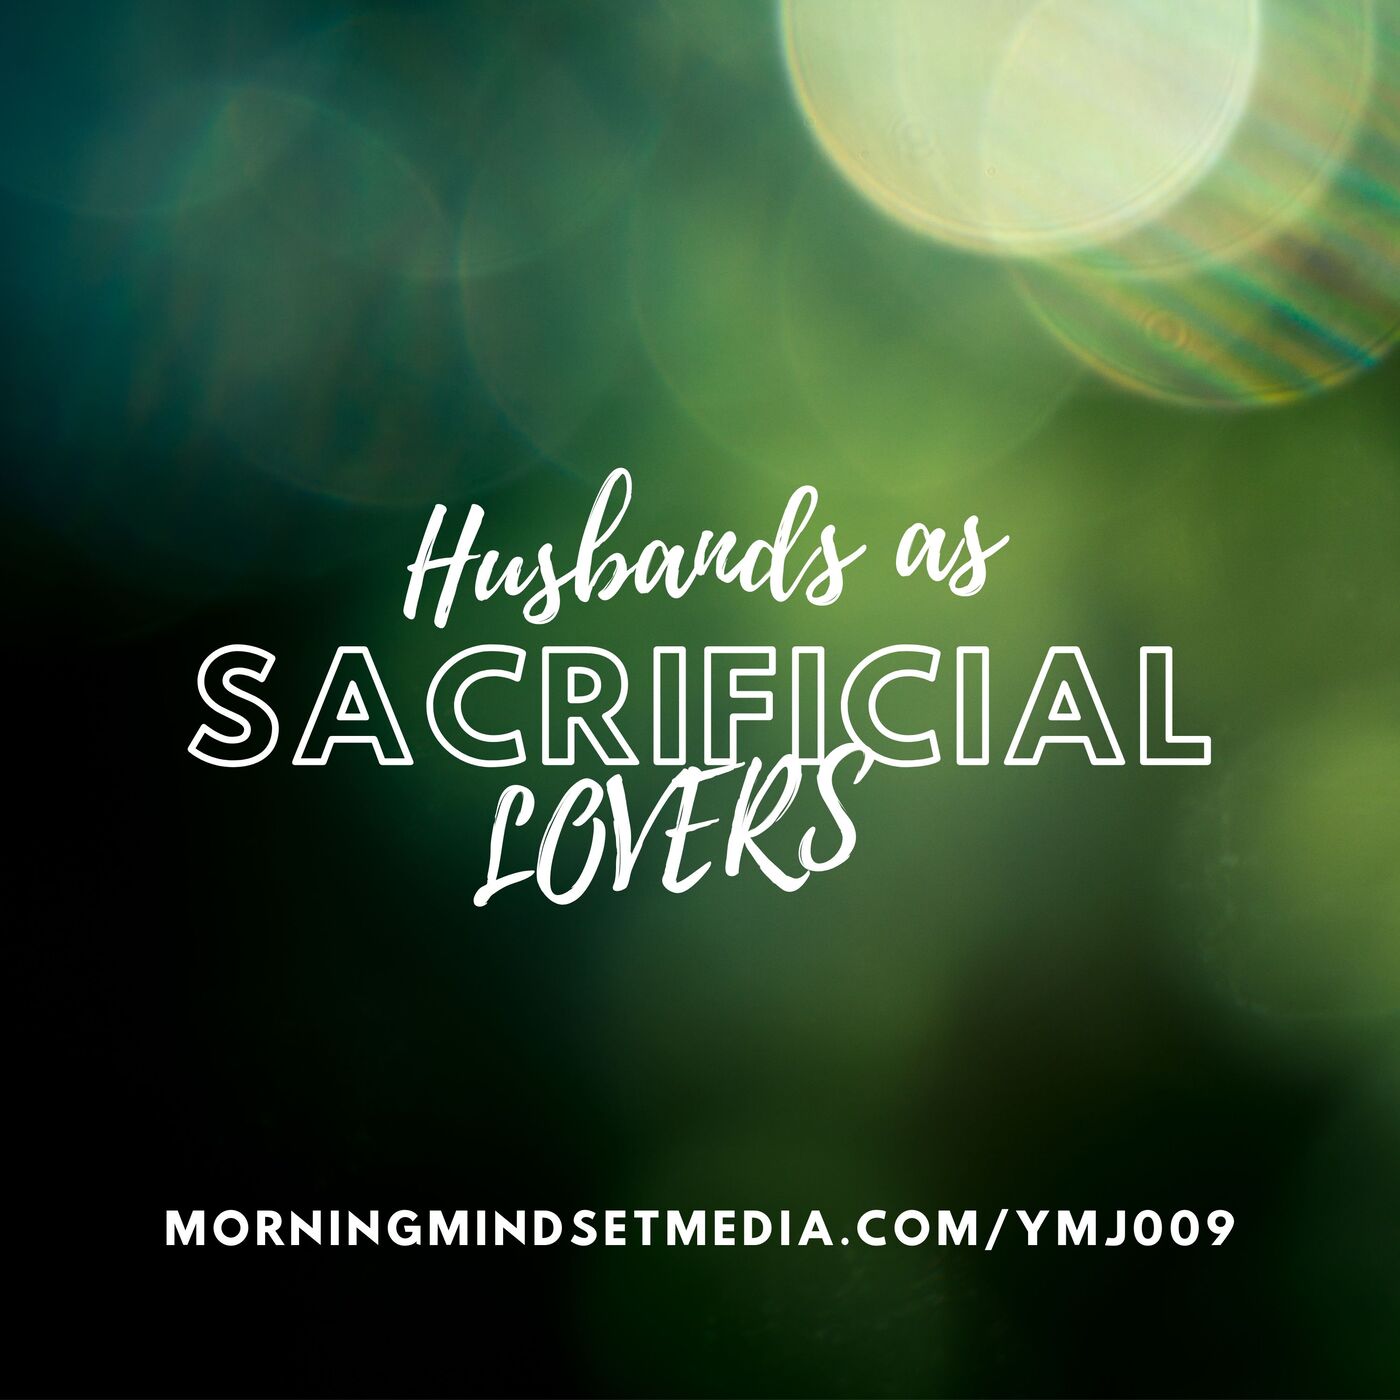 009: Husbands as sacrificial lovers